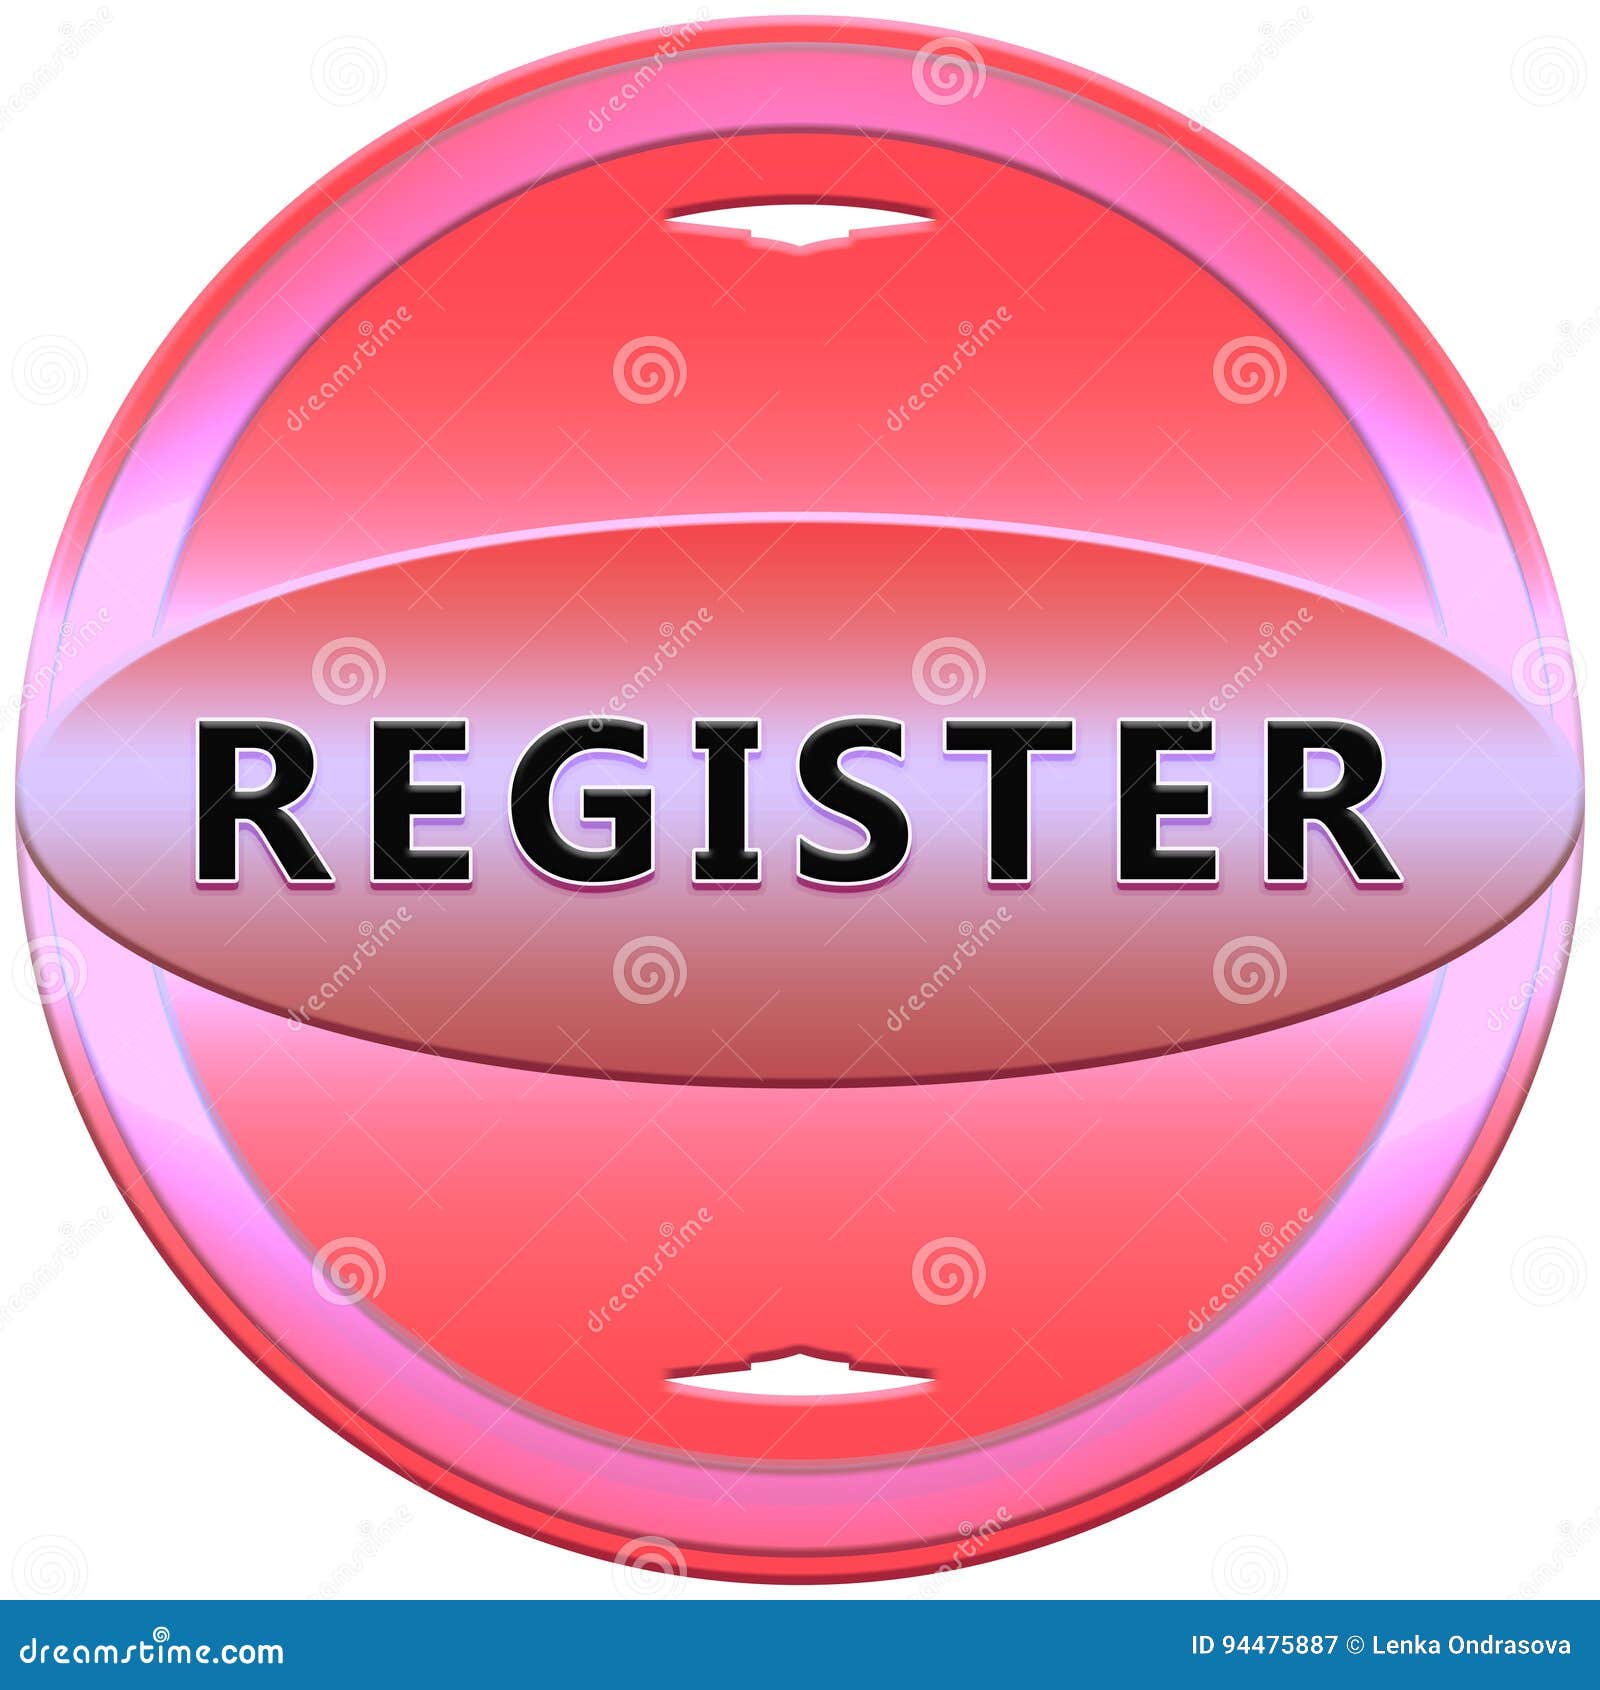 Register button stock illustration. Illustration of banner - 94475887